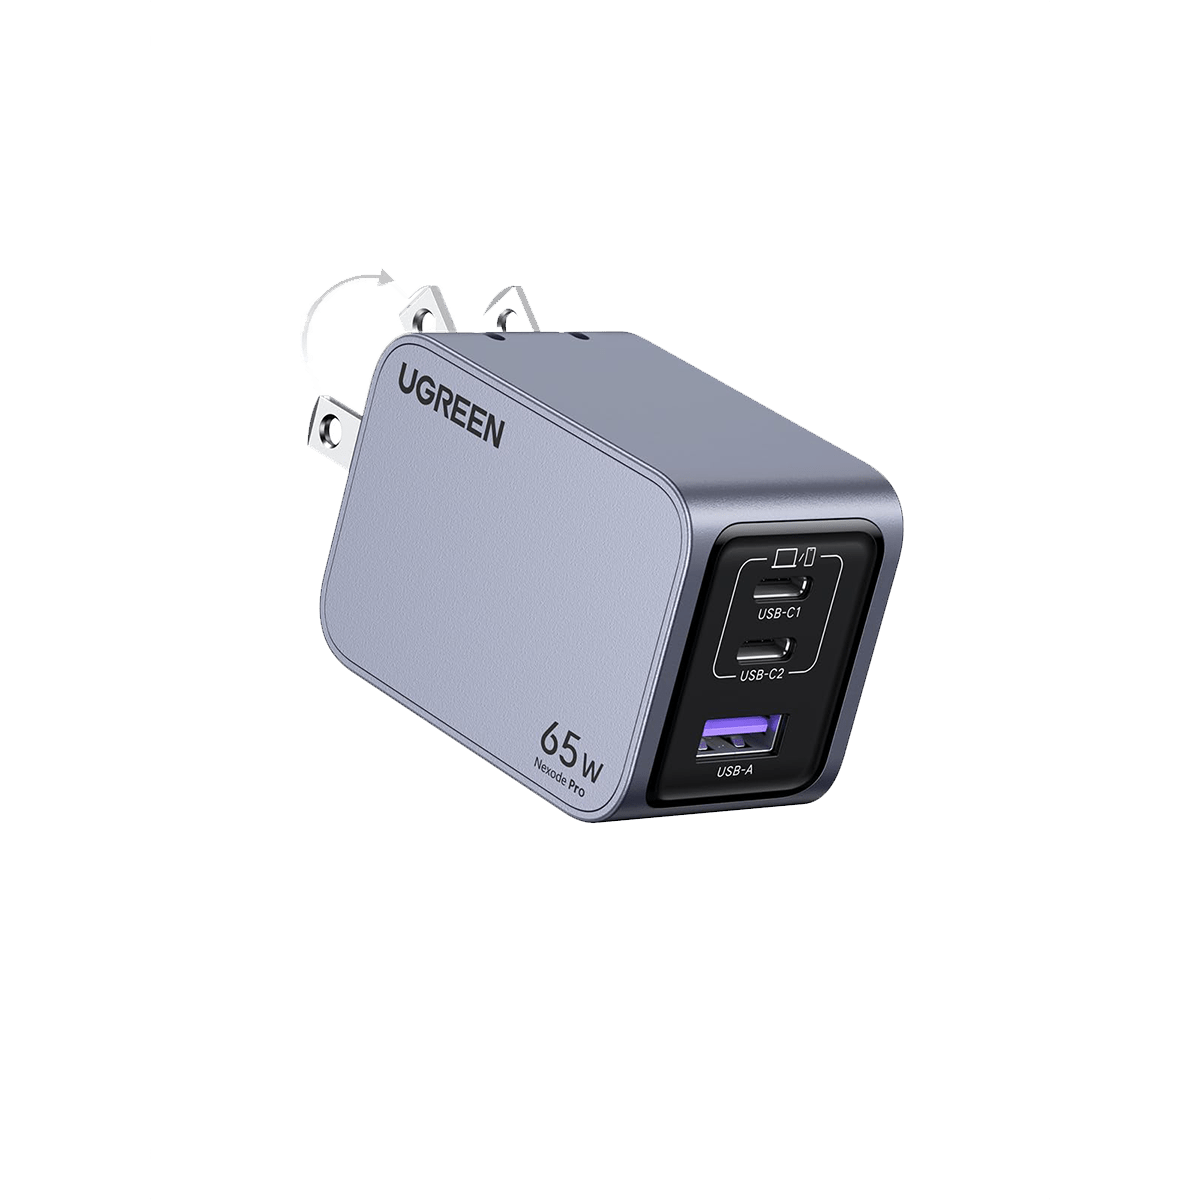 Nexode Pro 65W 3-Port GaN Fast Charger – UGREEN